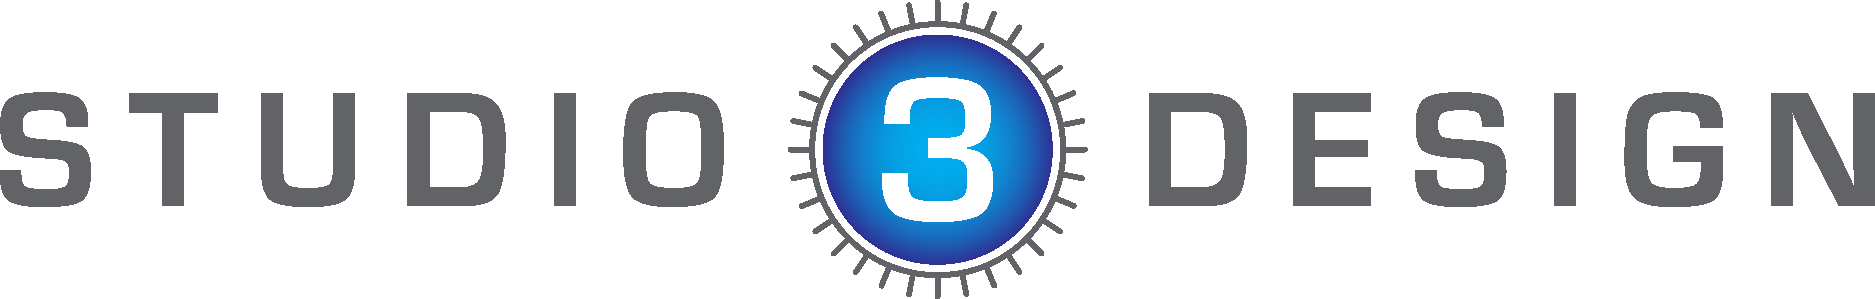 Studio 3 Design Logo Vector